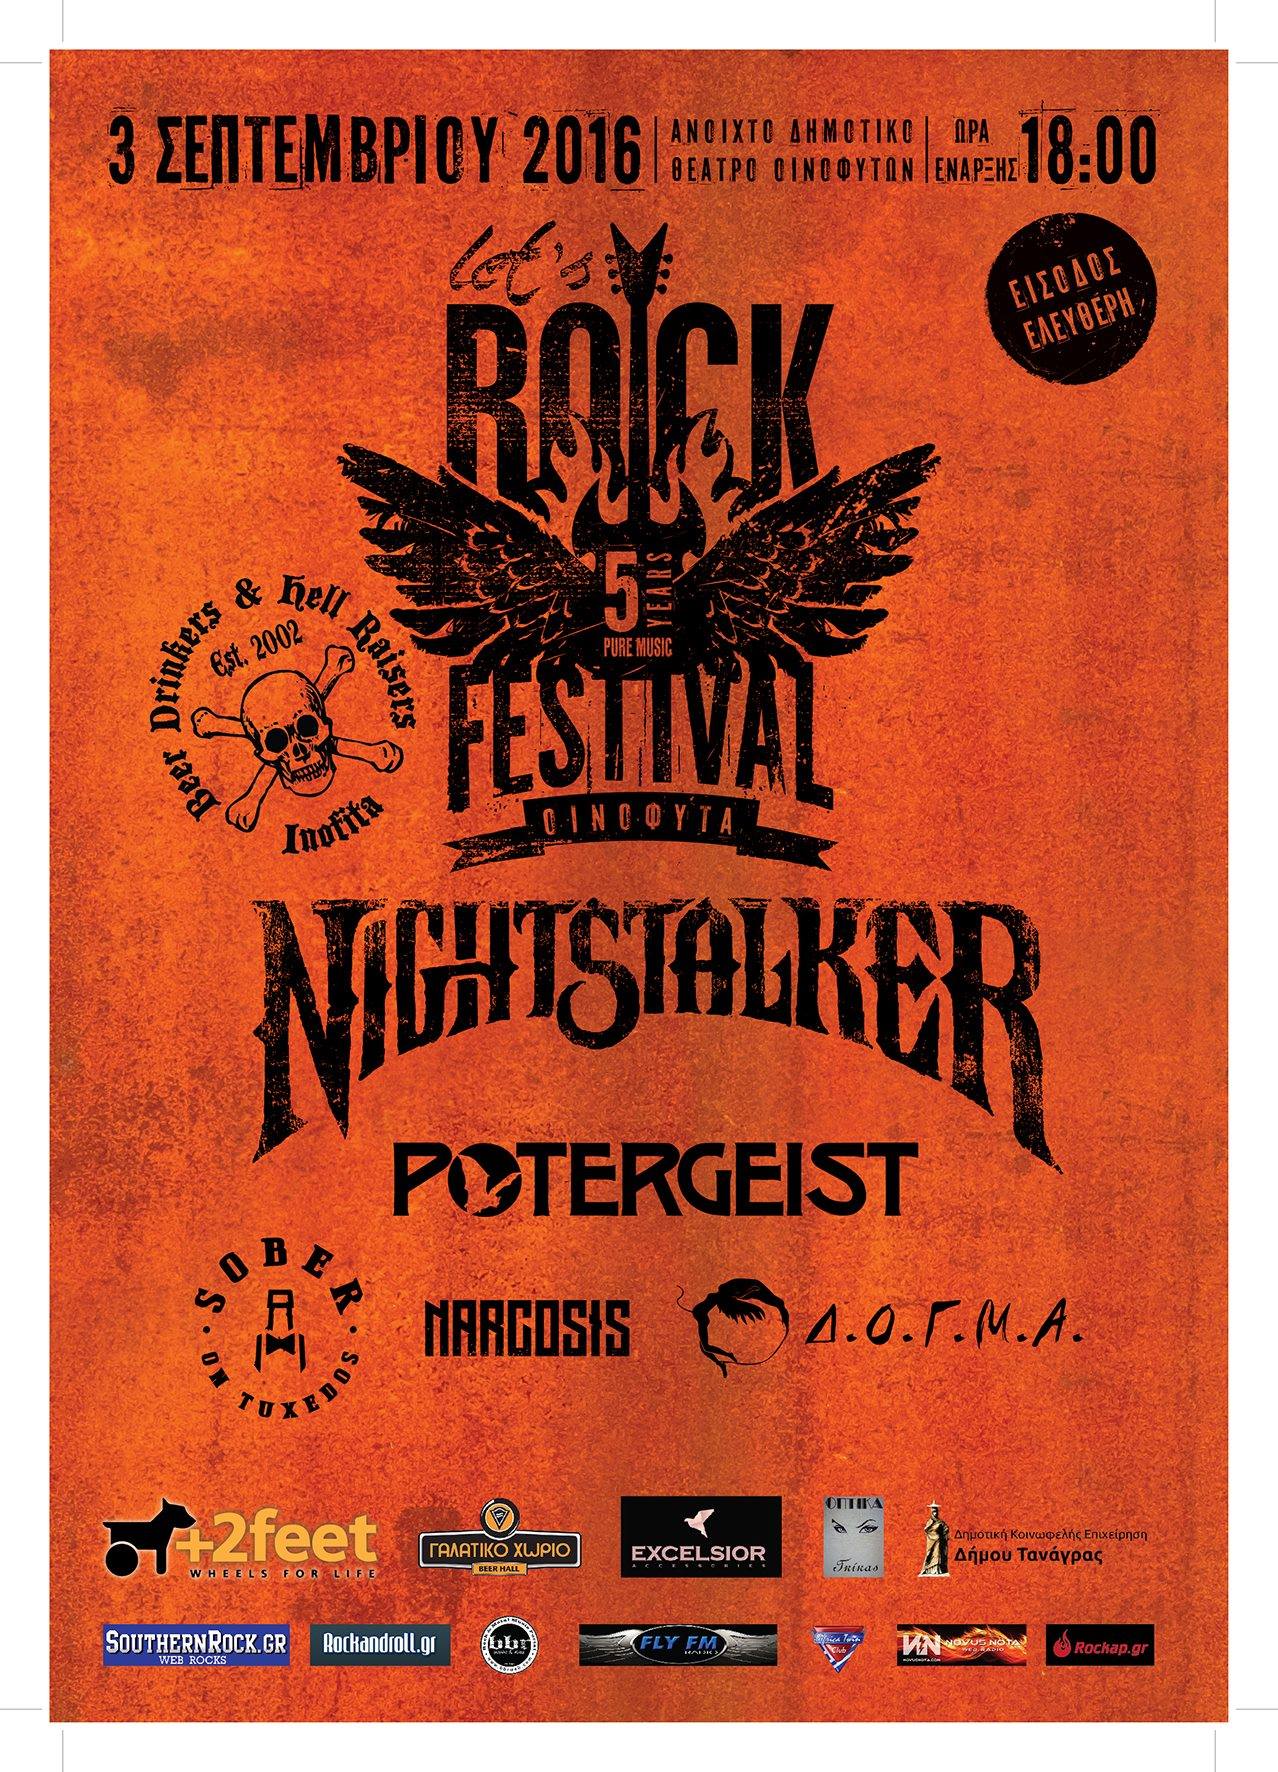 03.09.2016 – Let’s Rock Festival 2016